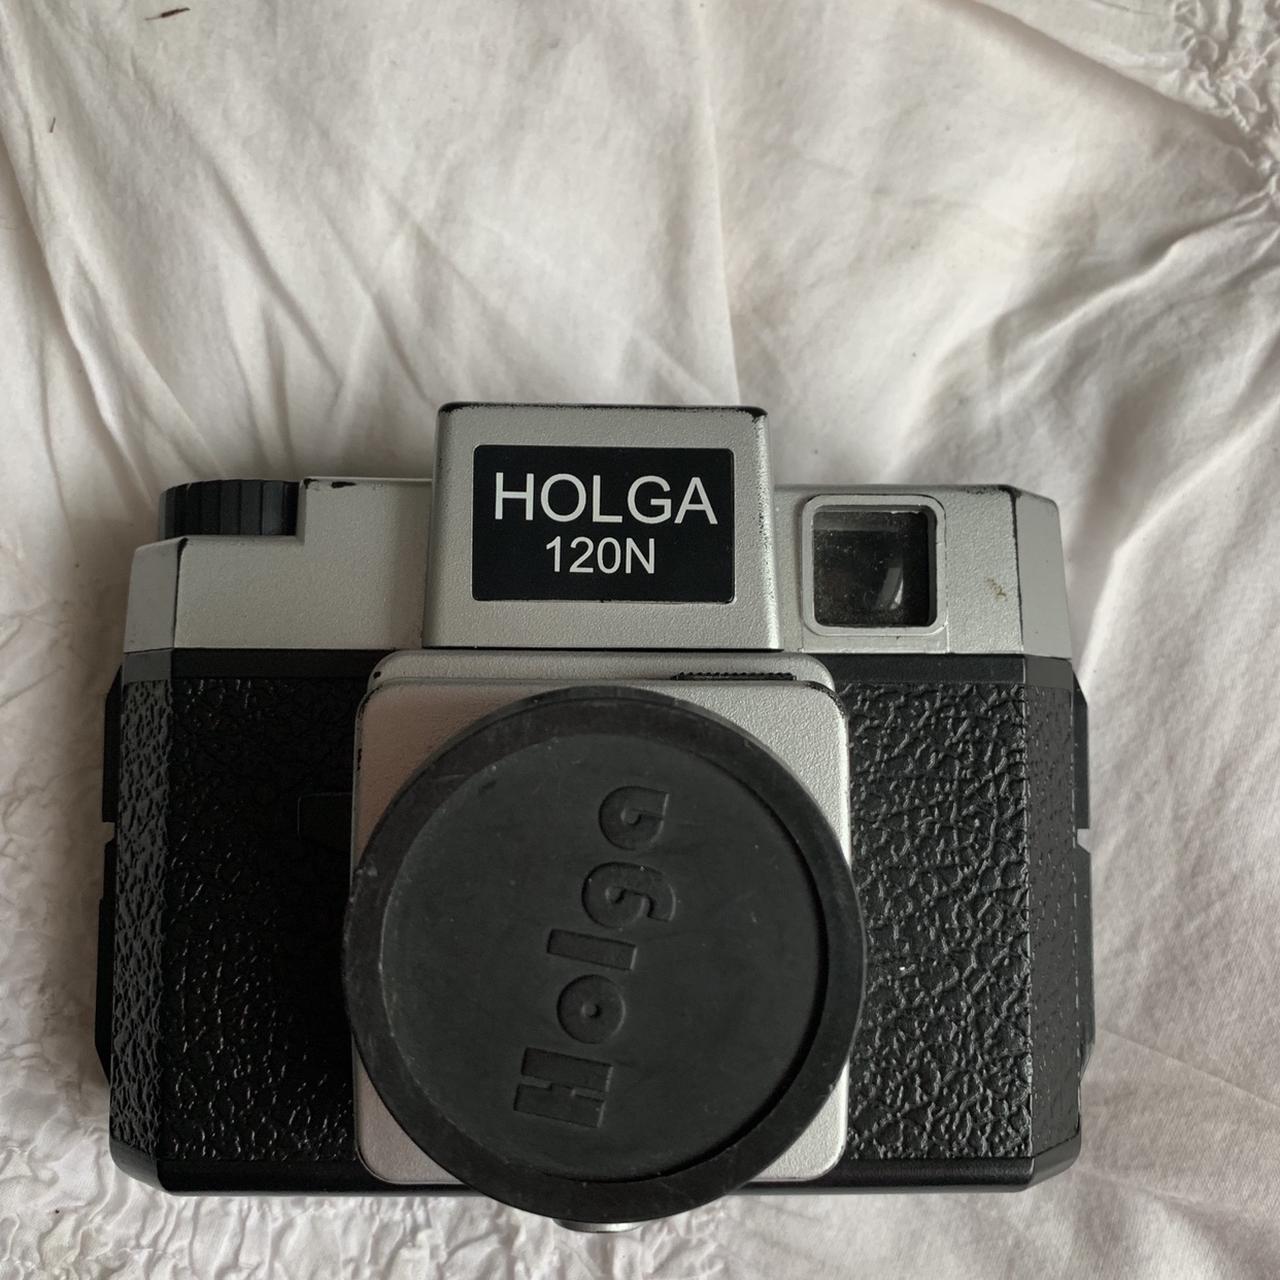 Product Image 1 - Holga 120 toy camera. Fun